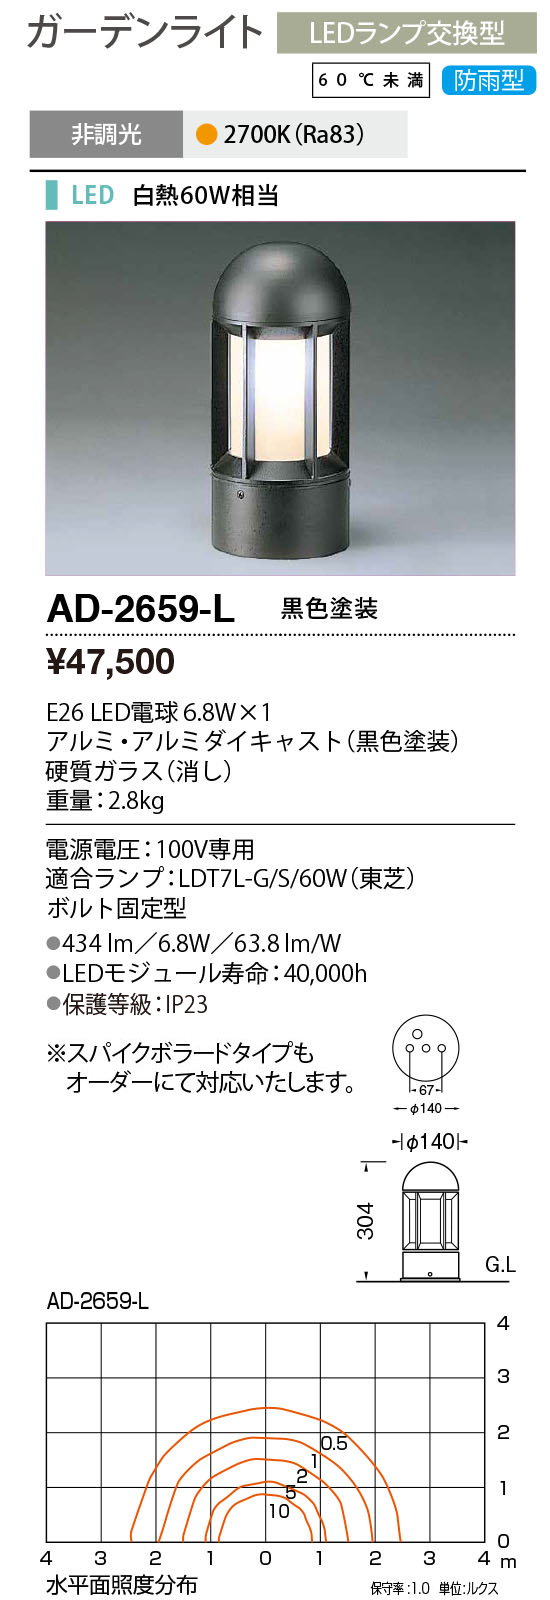 AD-2665-L エクステリア LEDランプ交換型 ガーデンライト Farol 黒色塗装 白熱60W相当 60℃未満 防雨型 非調光 電球色 山田照明 庭園 花壇 公園用 - 4